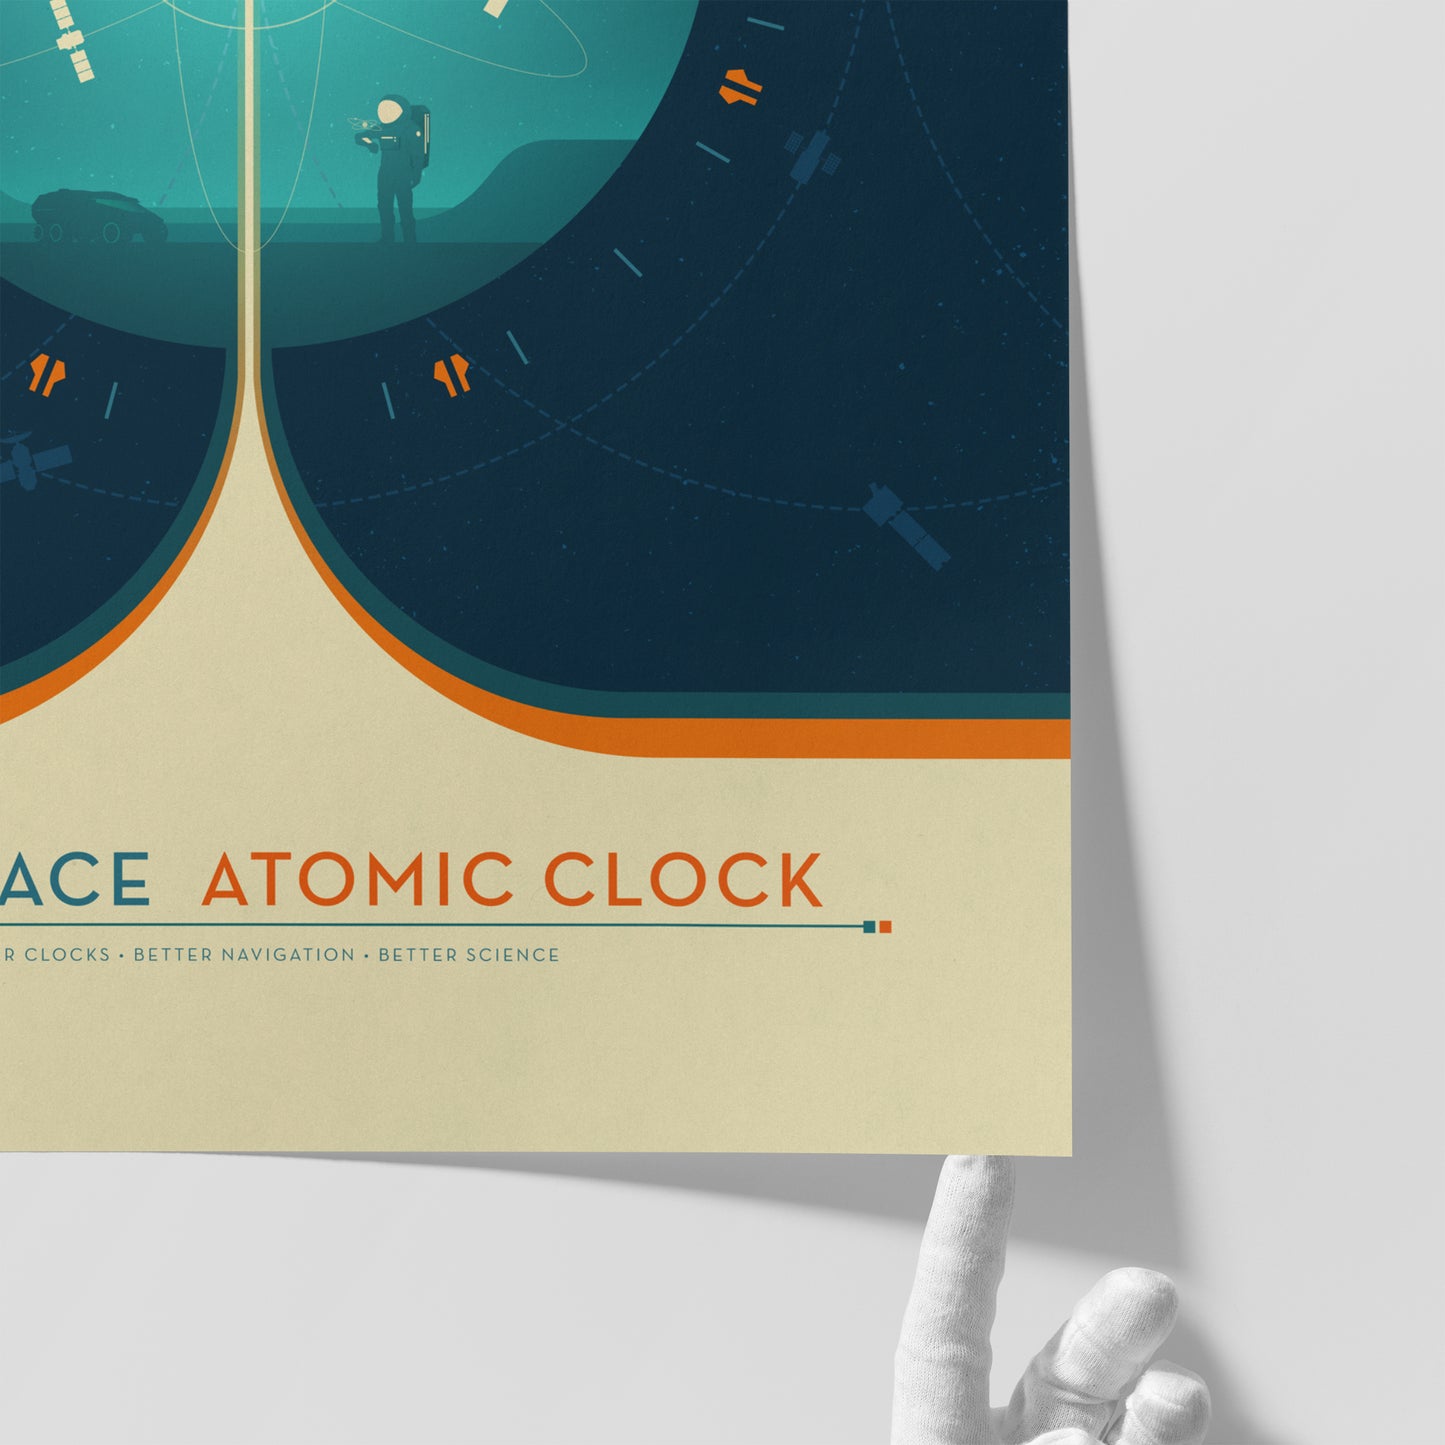 Deep Space Atomic Clock